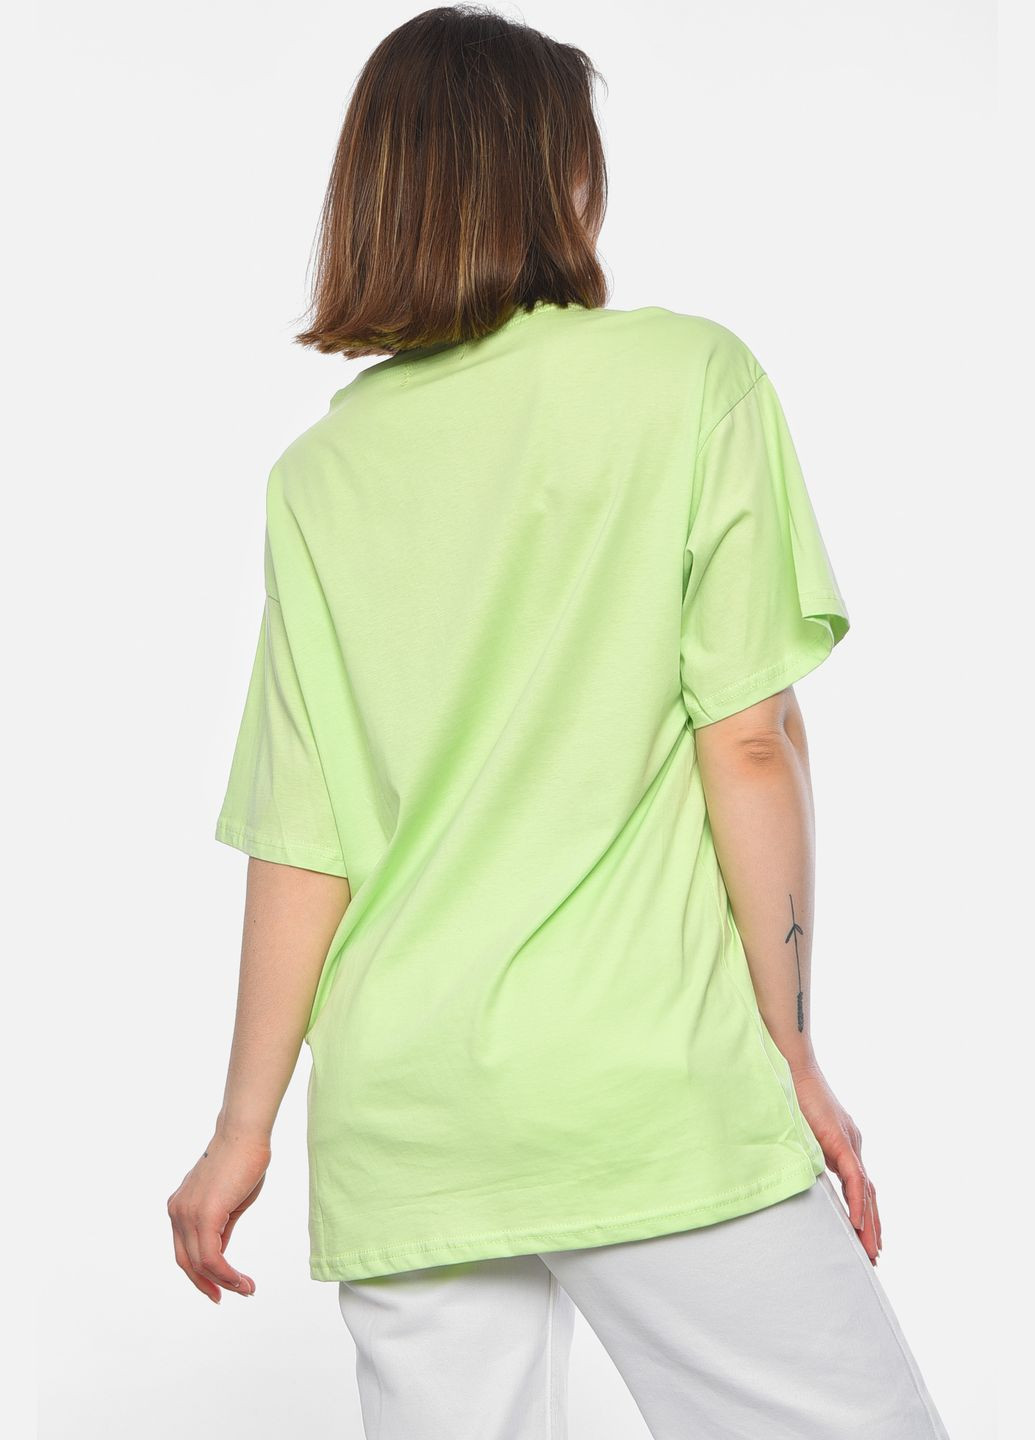 Салатова літня футболка жіноча напівбатальна салатового кольору Let's Shop